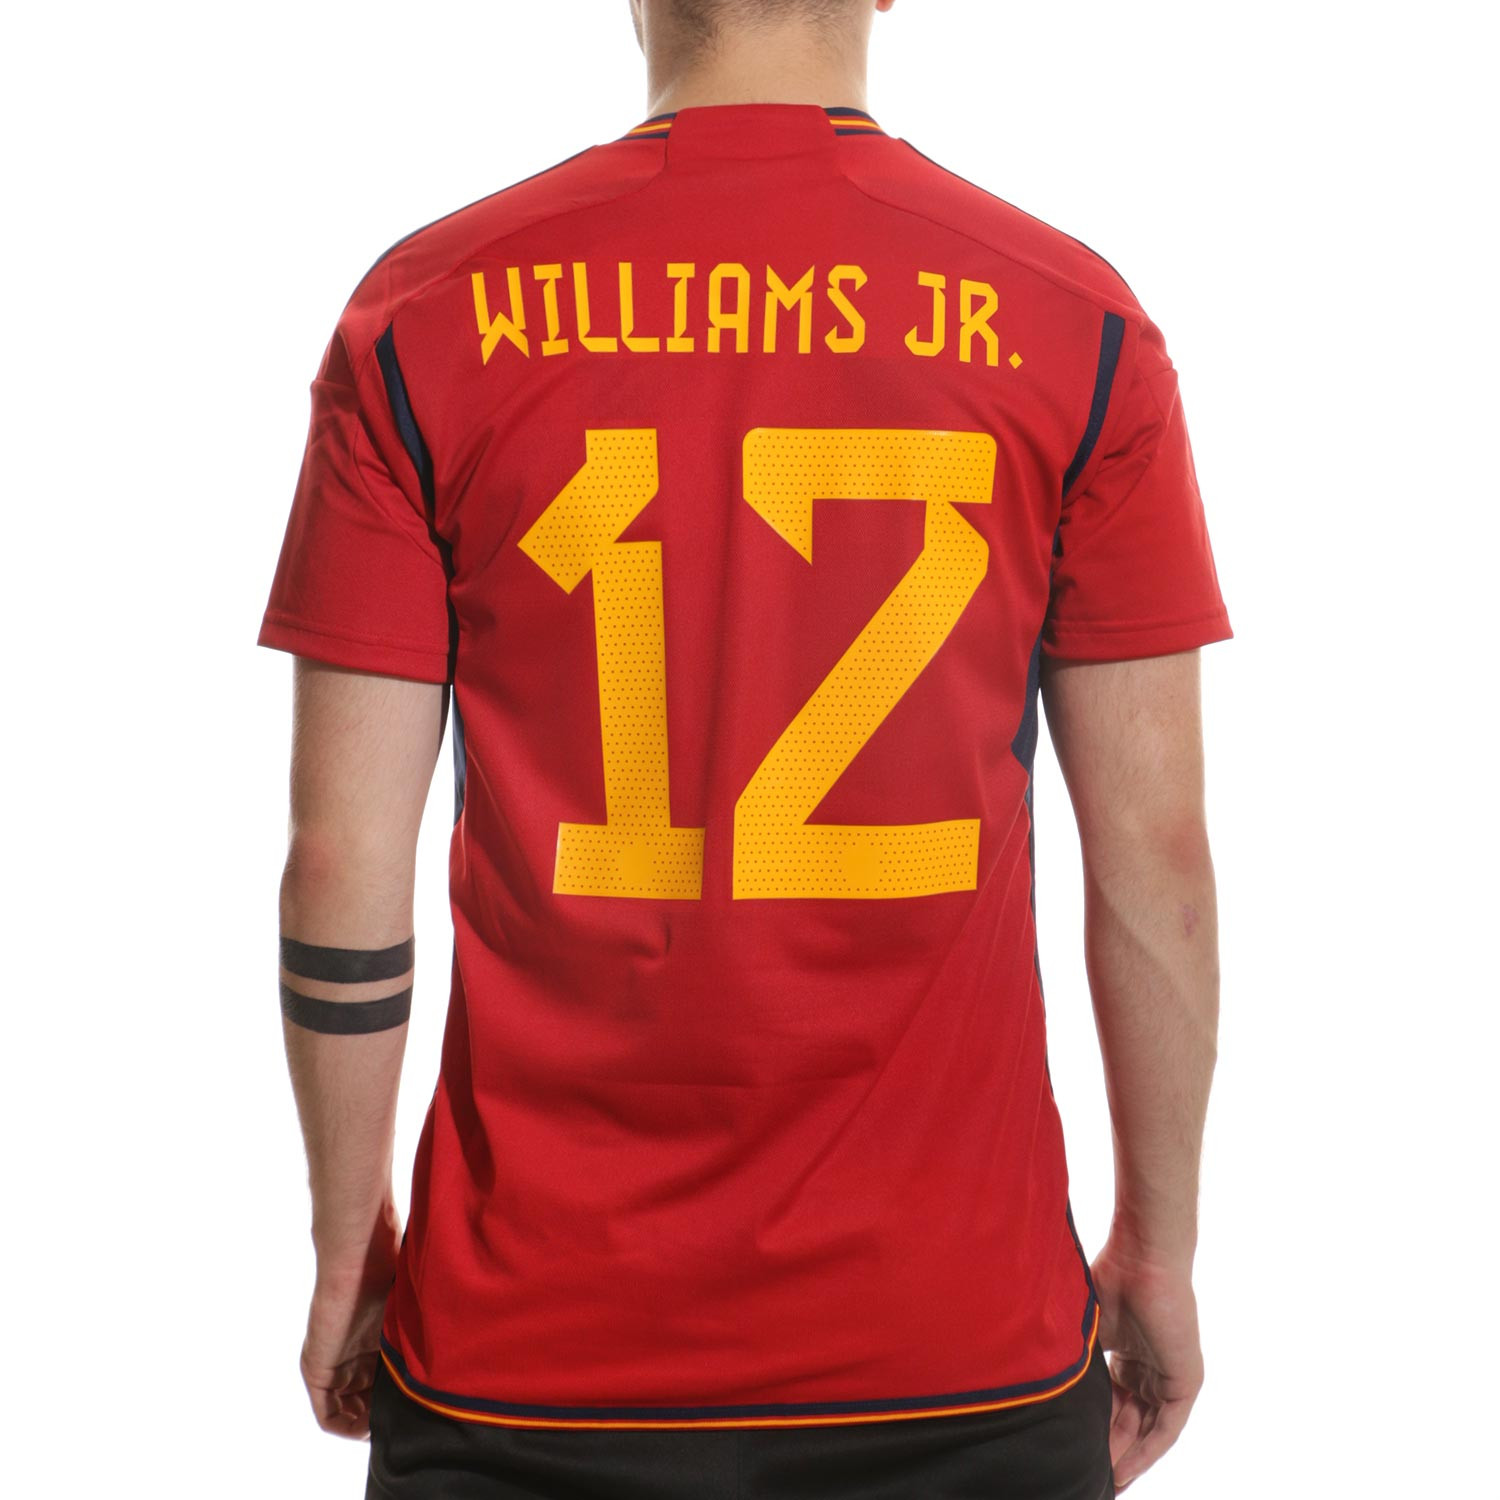 Adidas Camiseta España Mundial 2022-2023 Niños desde 40,39